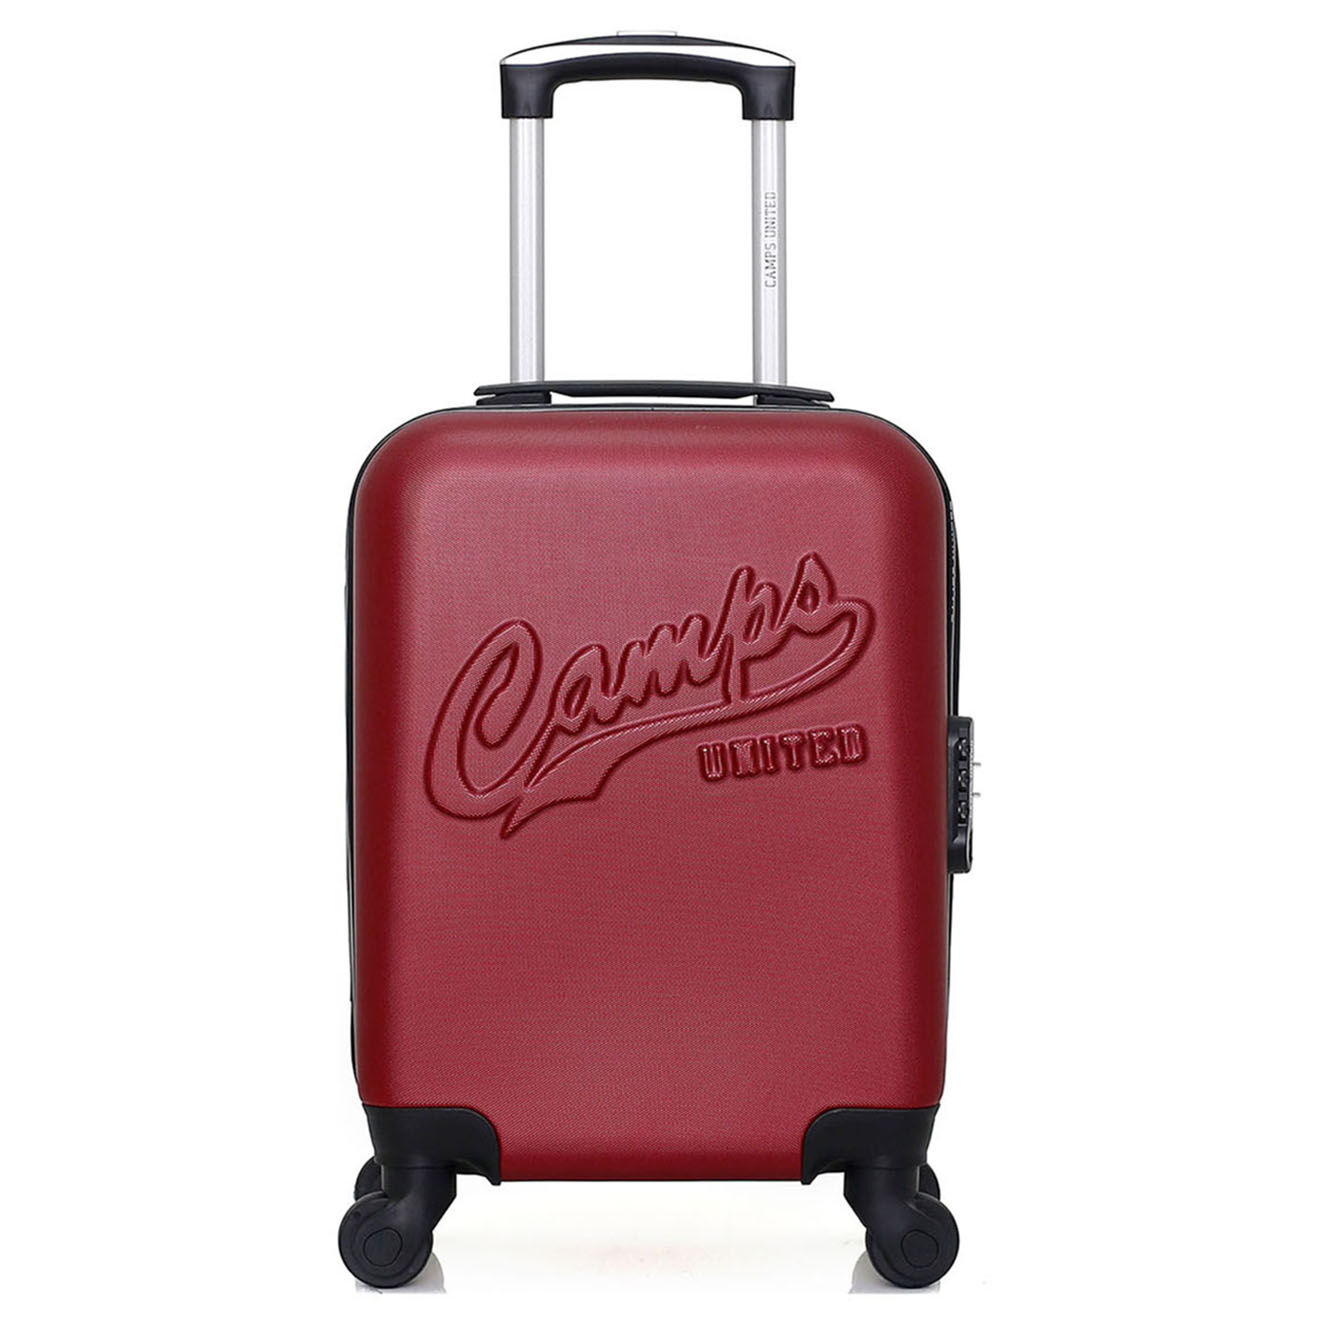 camps - valise cabine 4 roues simples columbia 55 cm rouge bordeaux